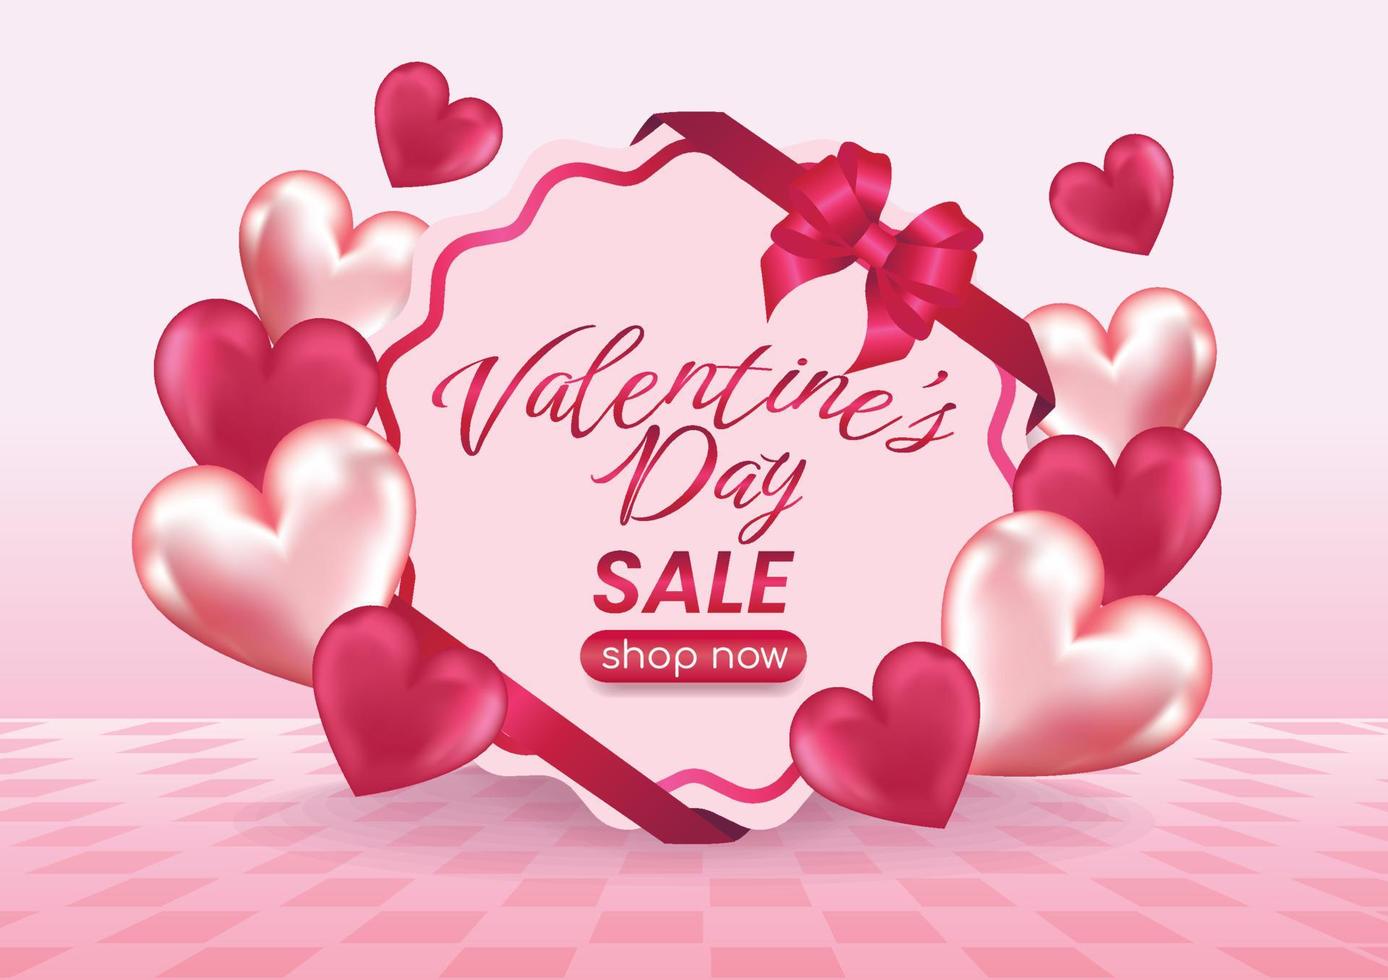 valentine's day sale circle display website banner background vector